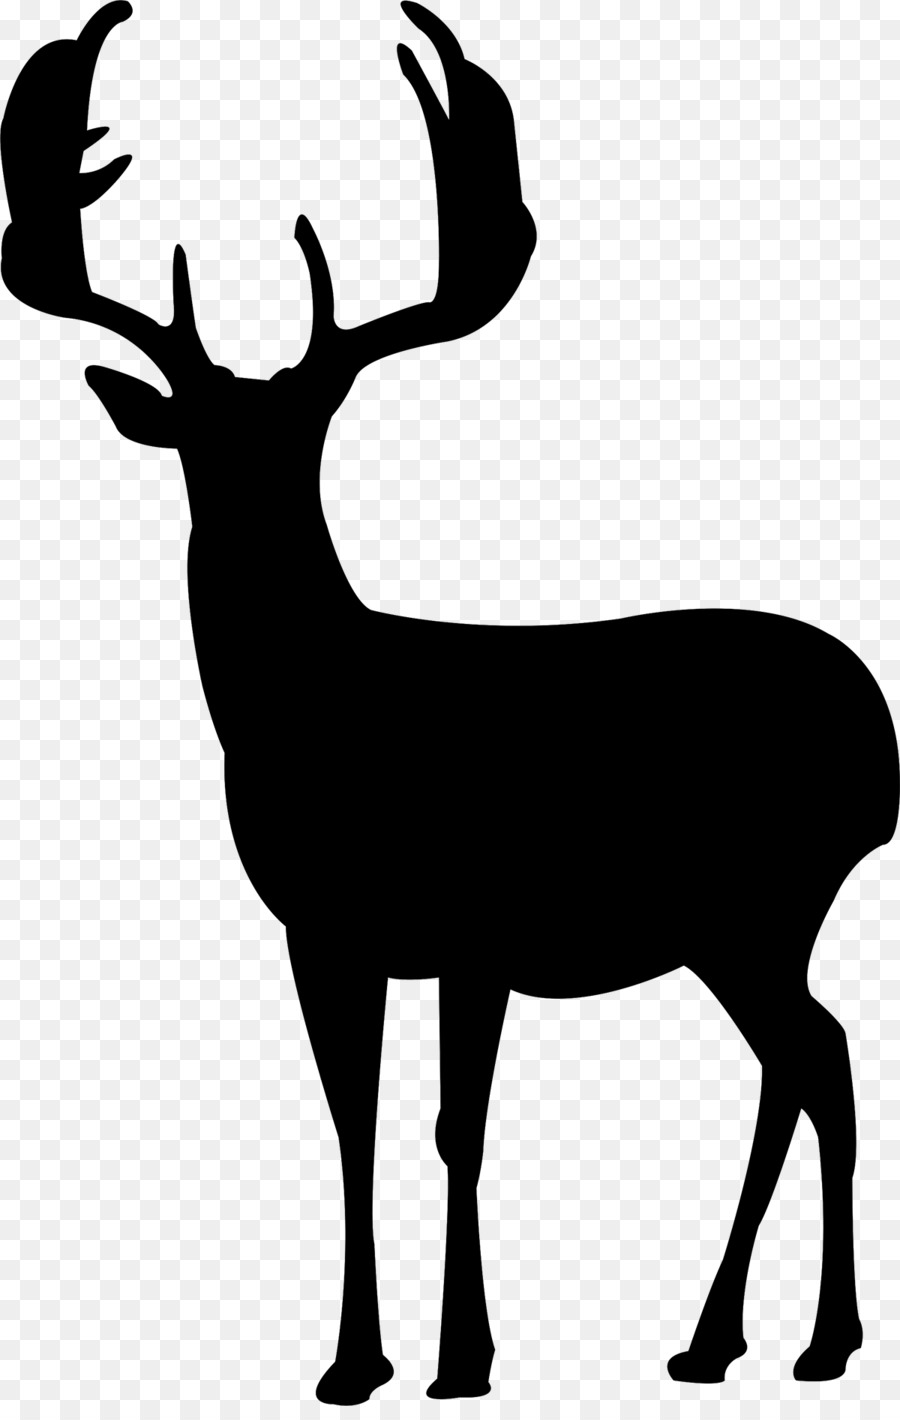 Deer Silhouette Canvas print - deer png download - 1200*1875 - Free Transparent Deer png Download.